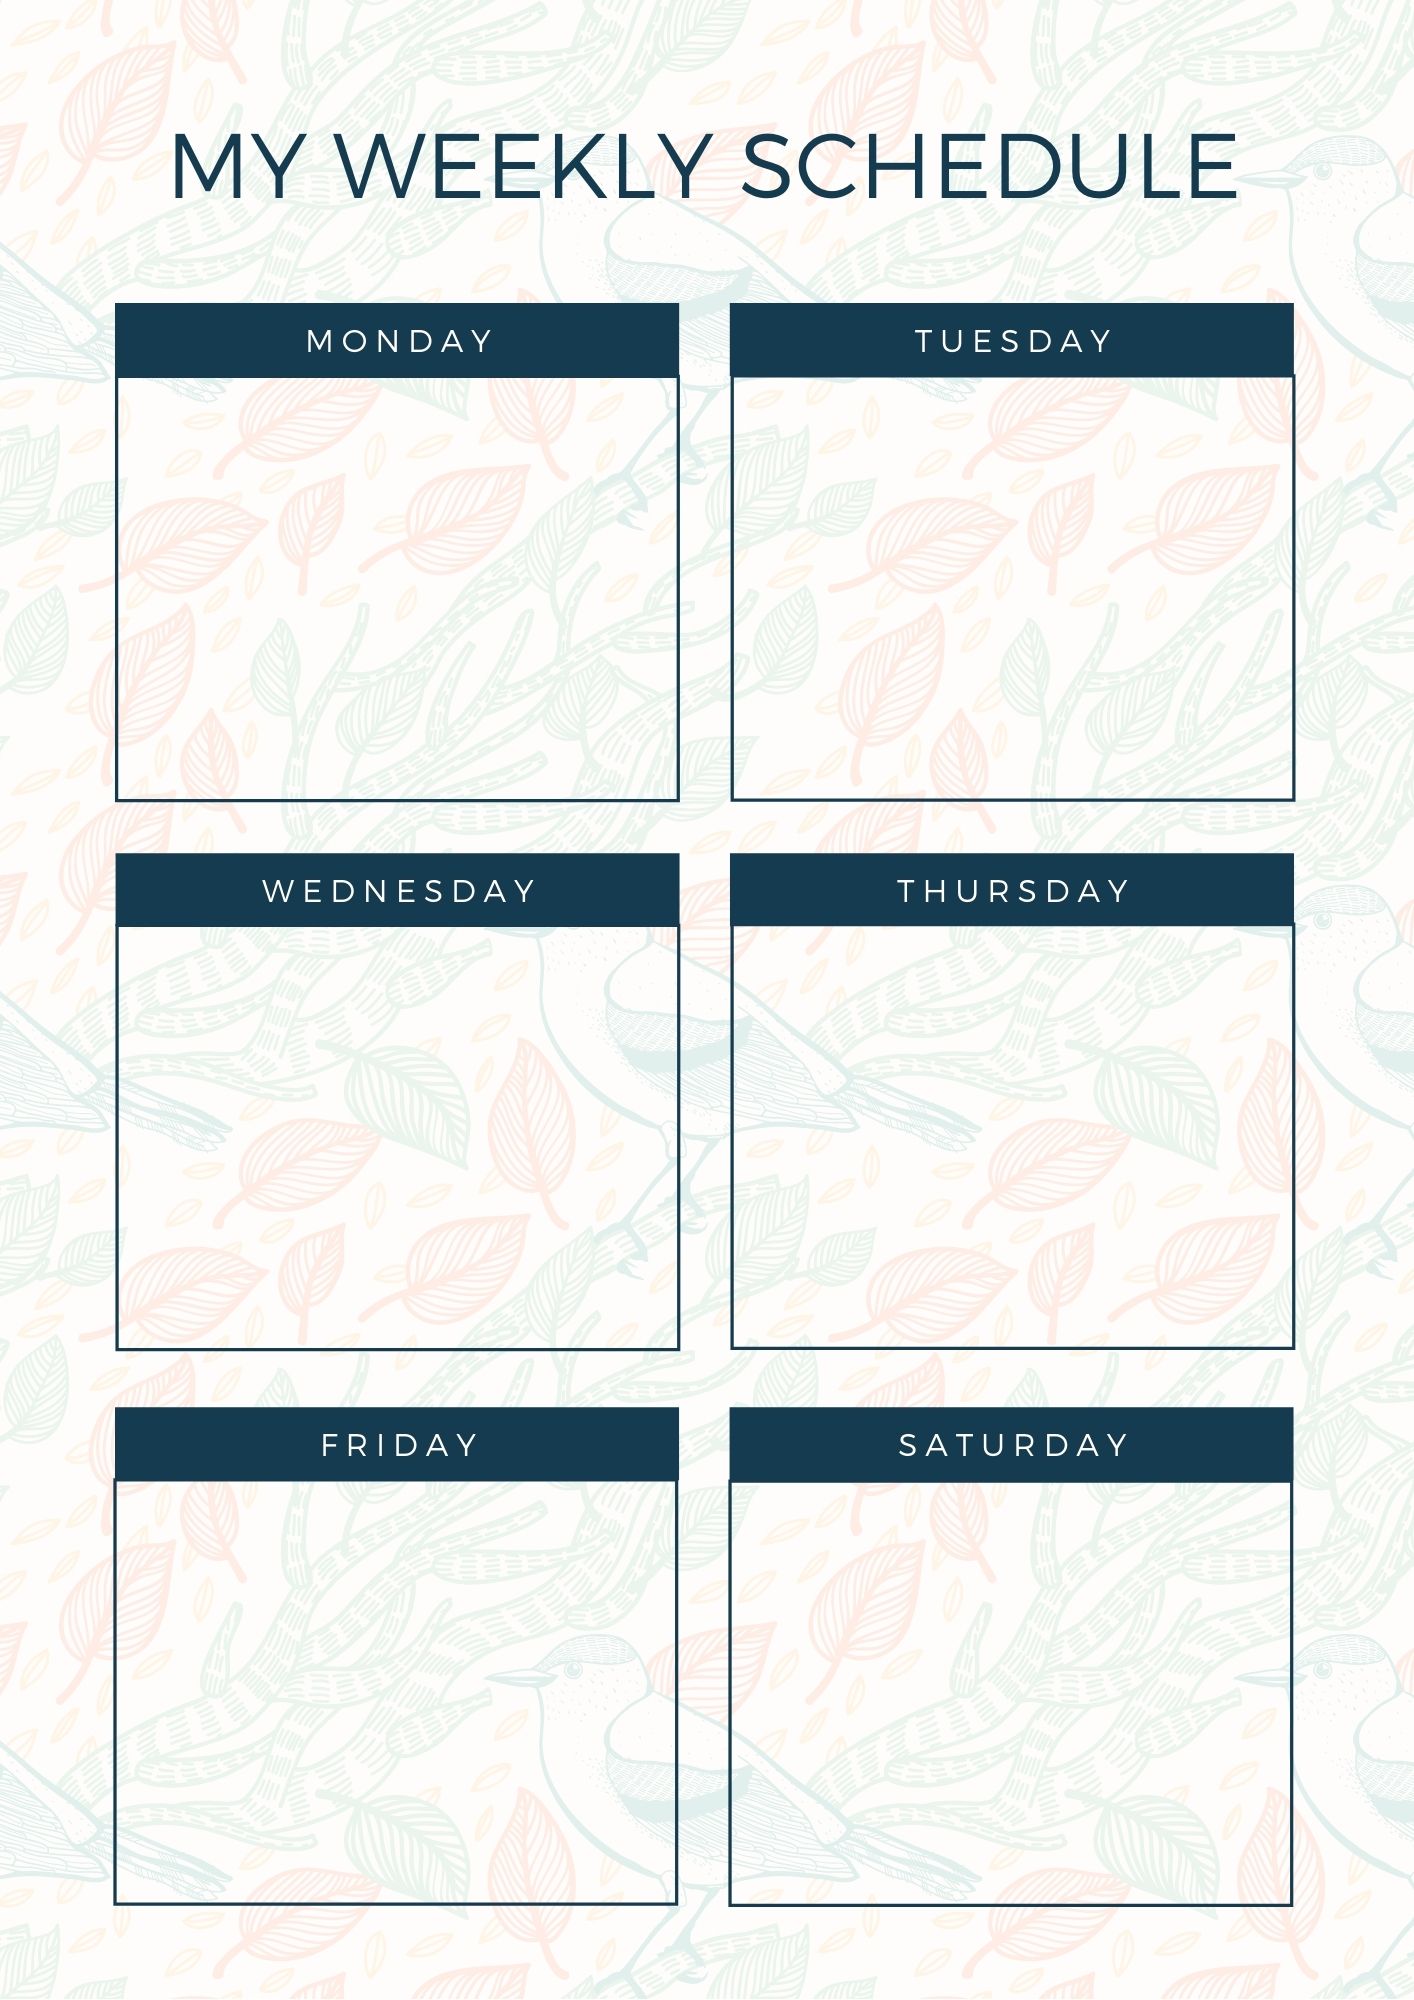 My Weekly Schedule